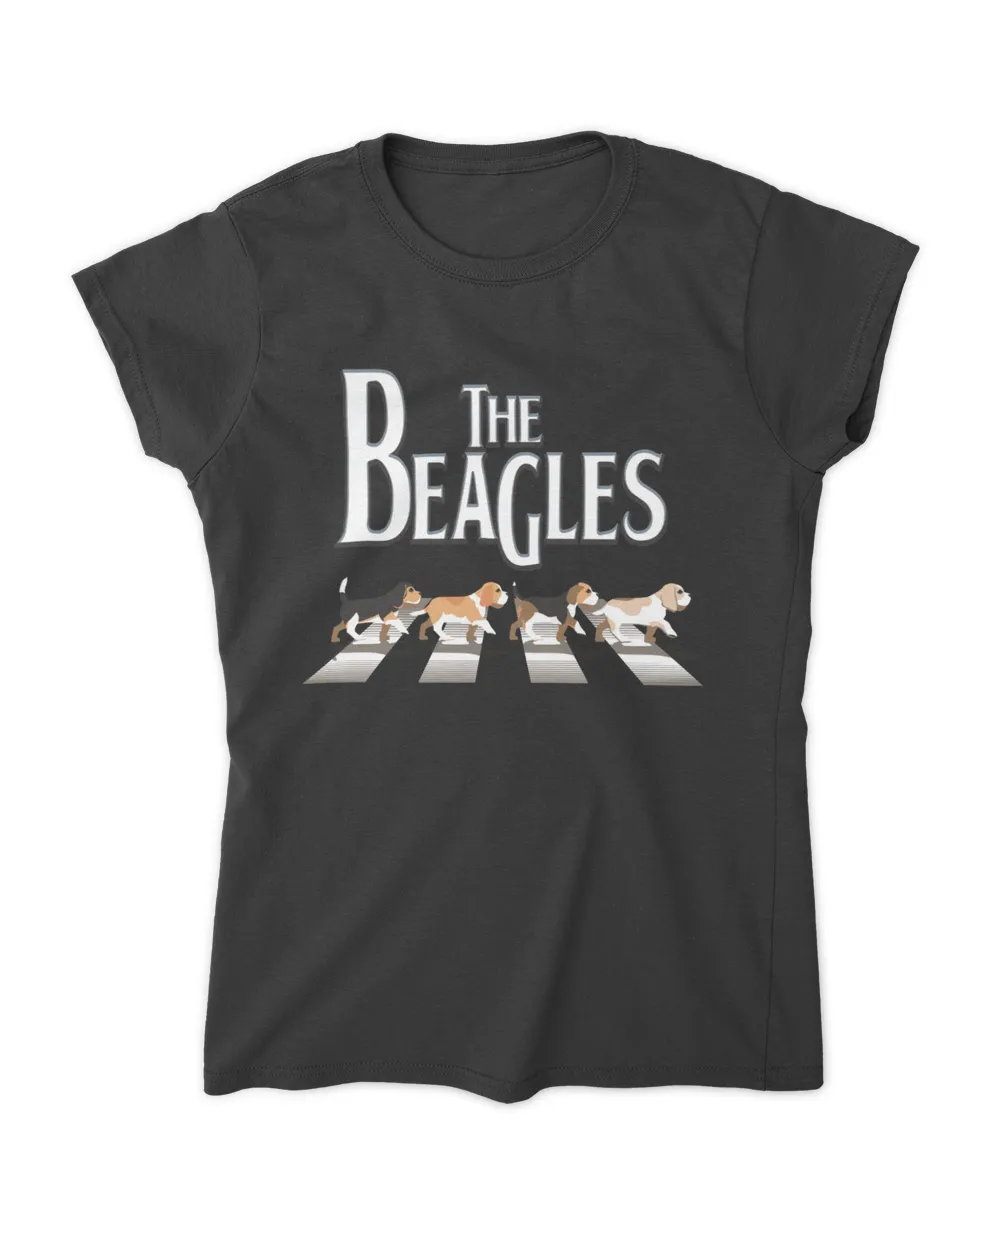 The Beagles HOD130123D13